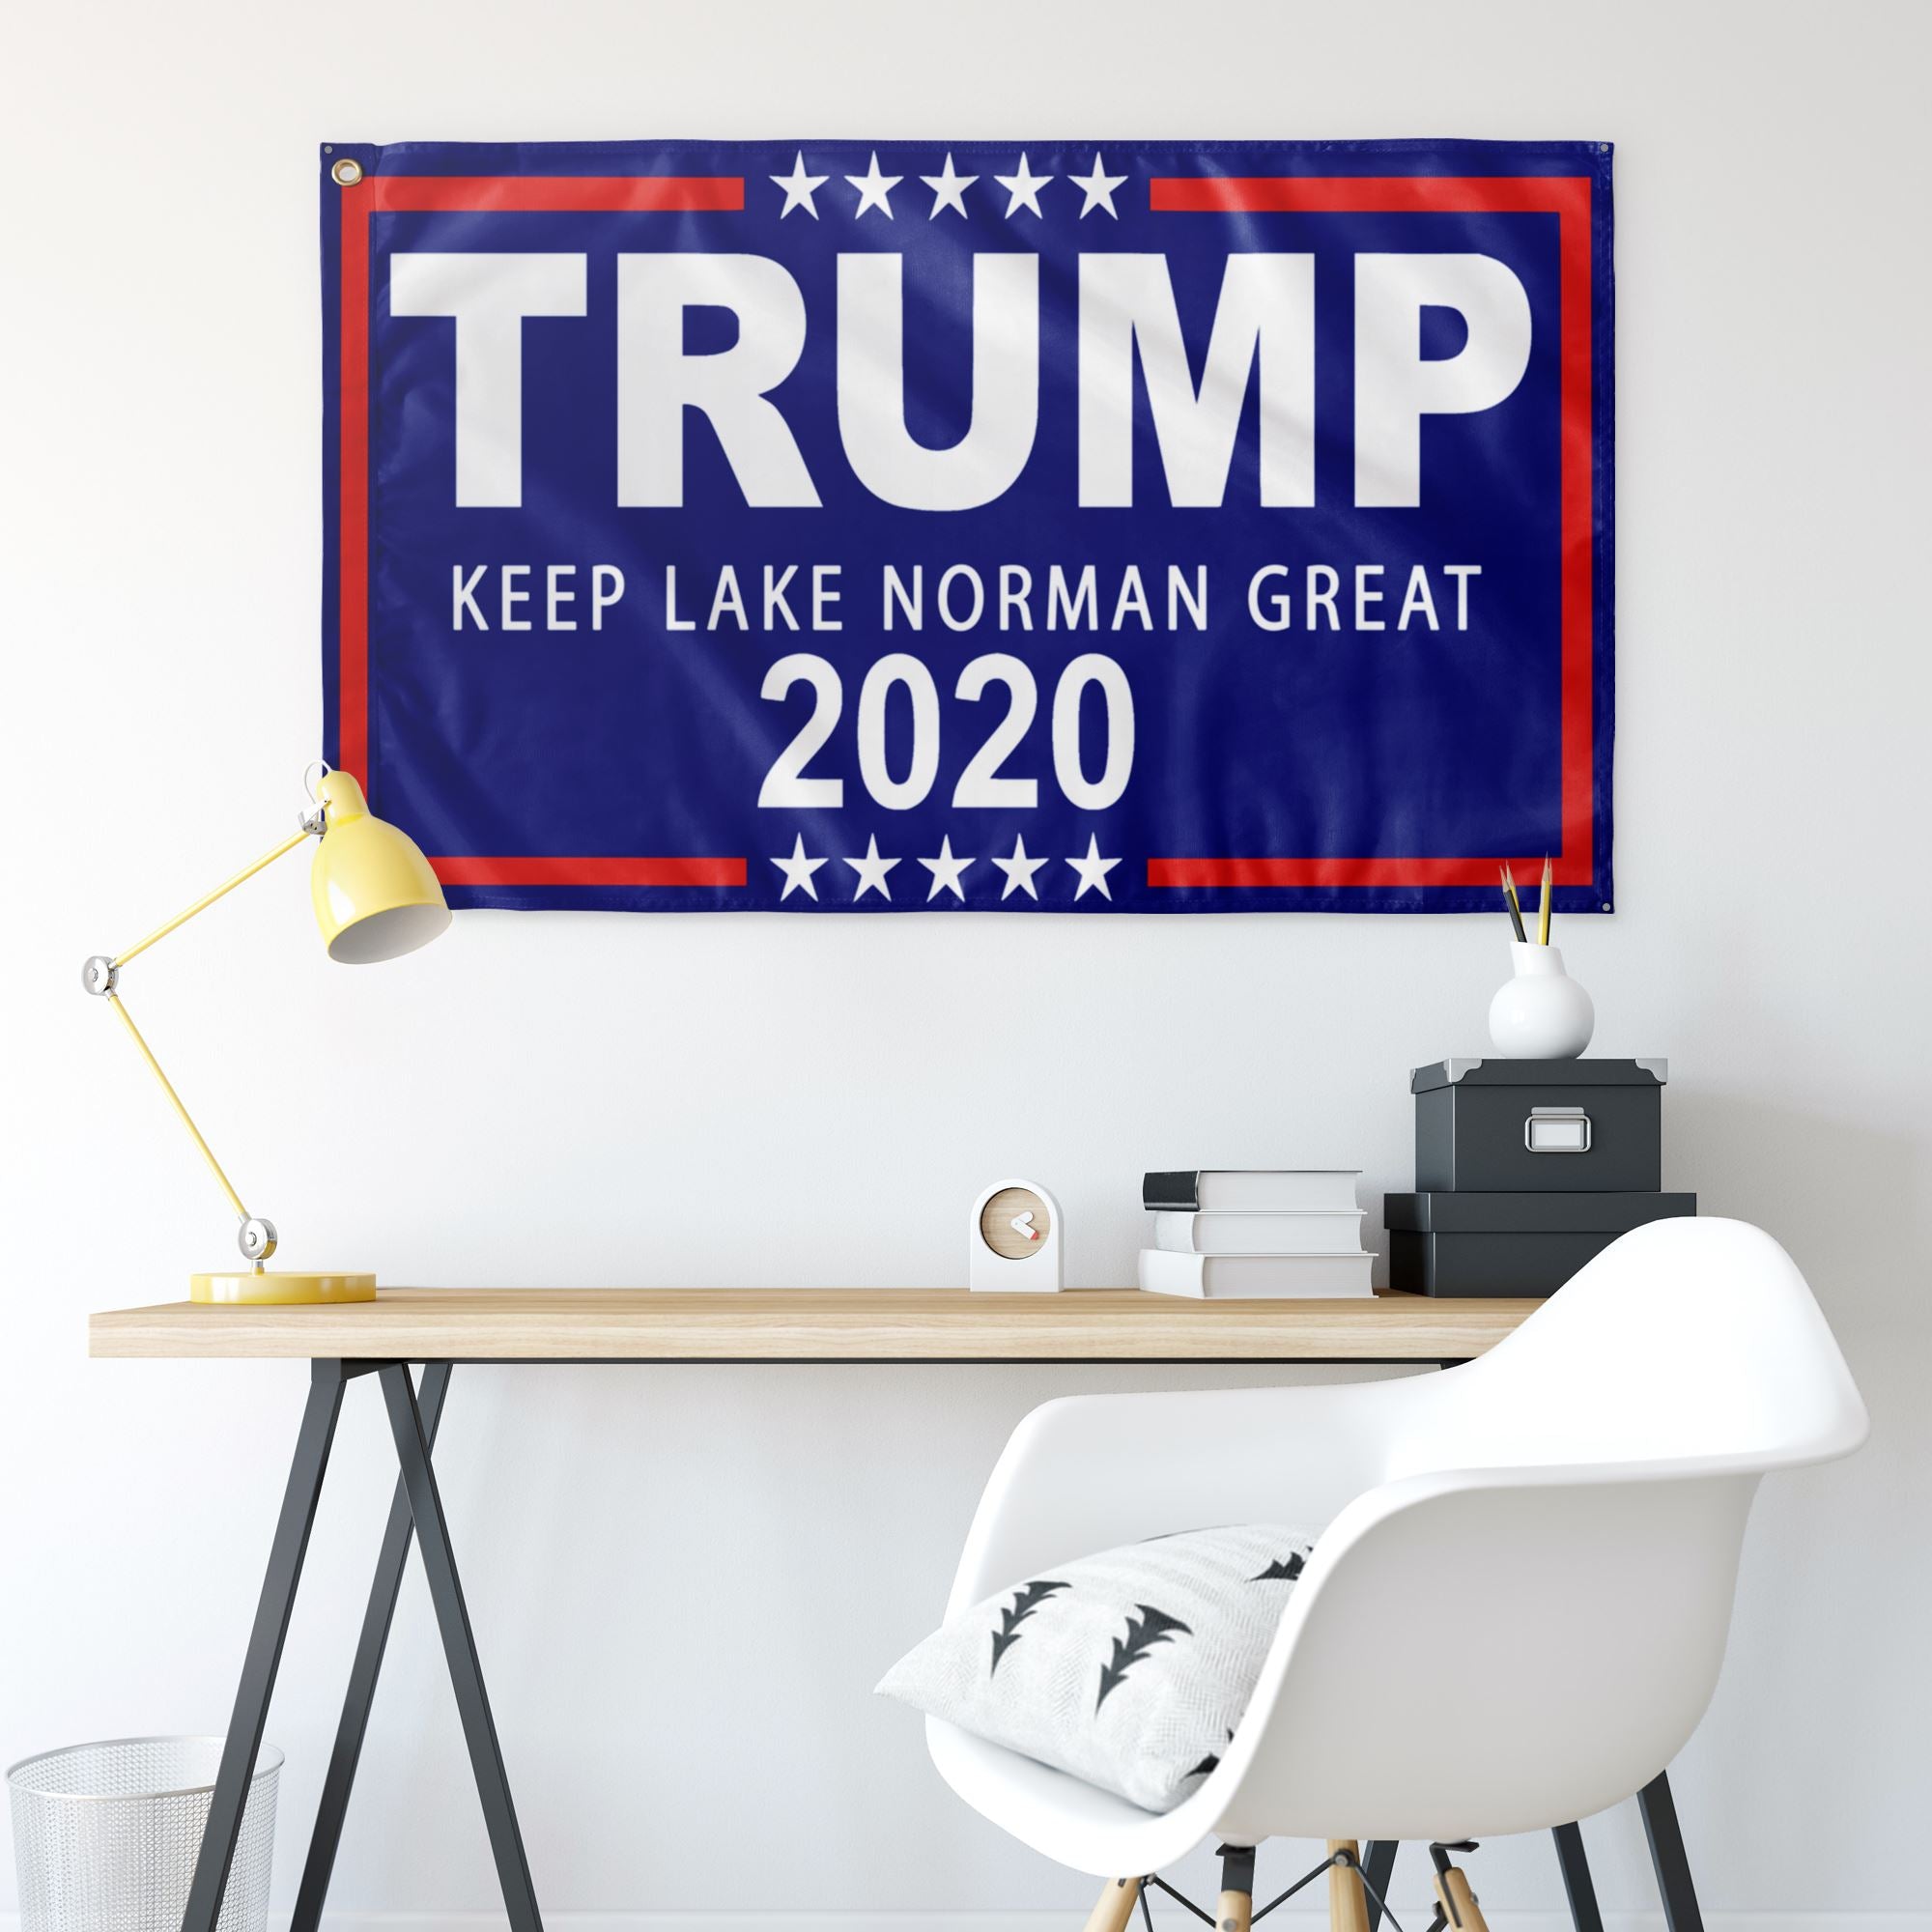 Trump Boat Flags - Keep Lake Norman Great - Houseboat Kings